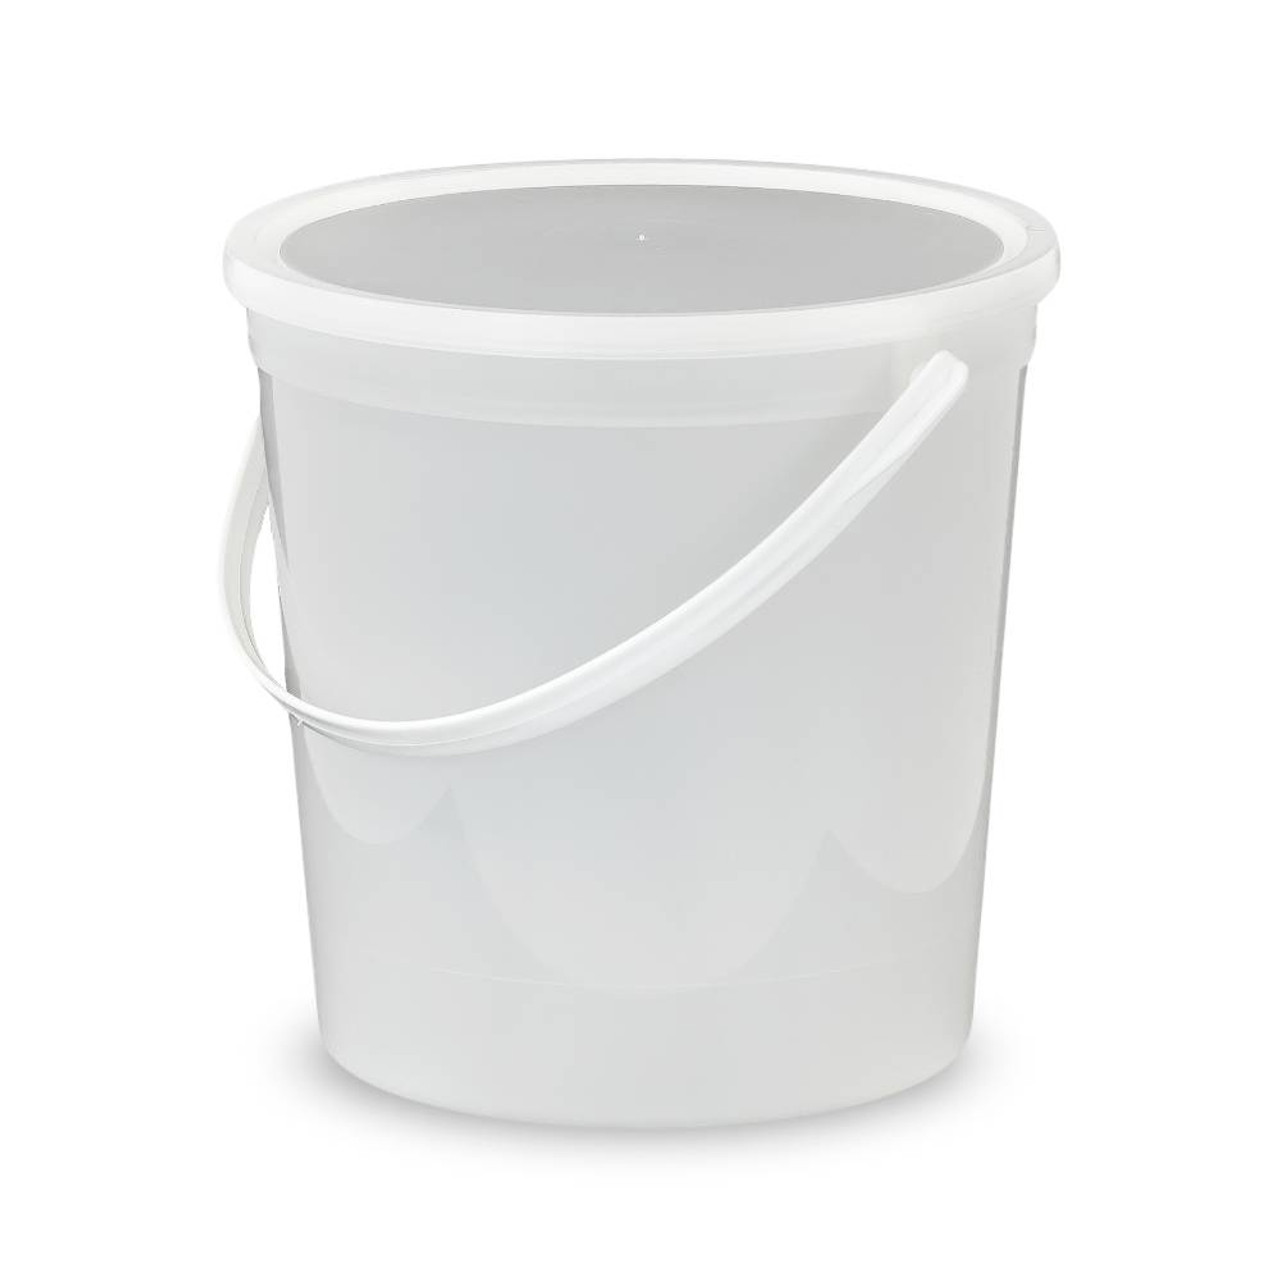 Top Fin 3 Gallon Bucket in White